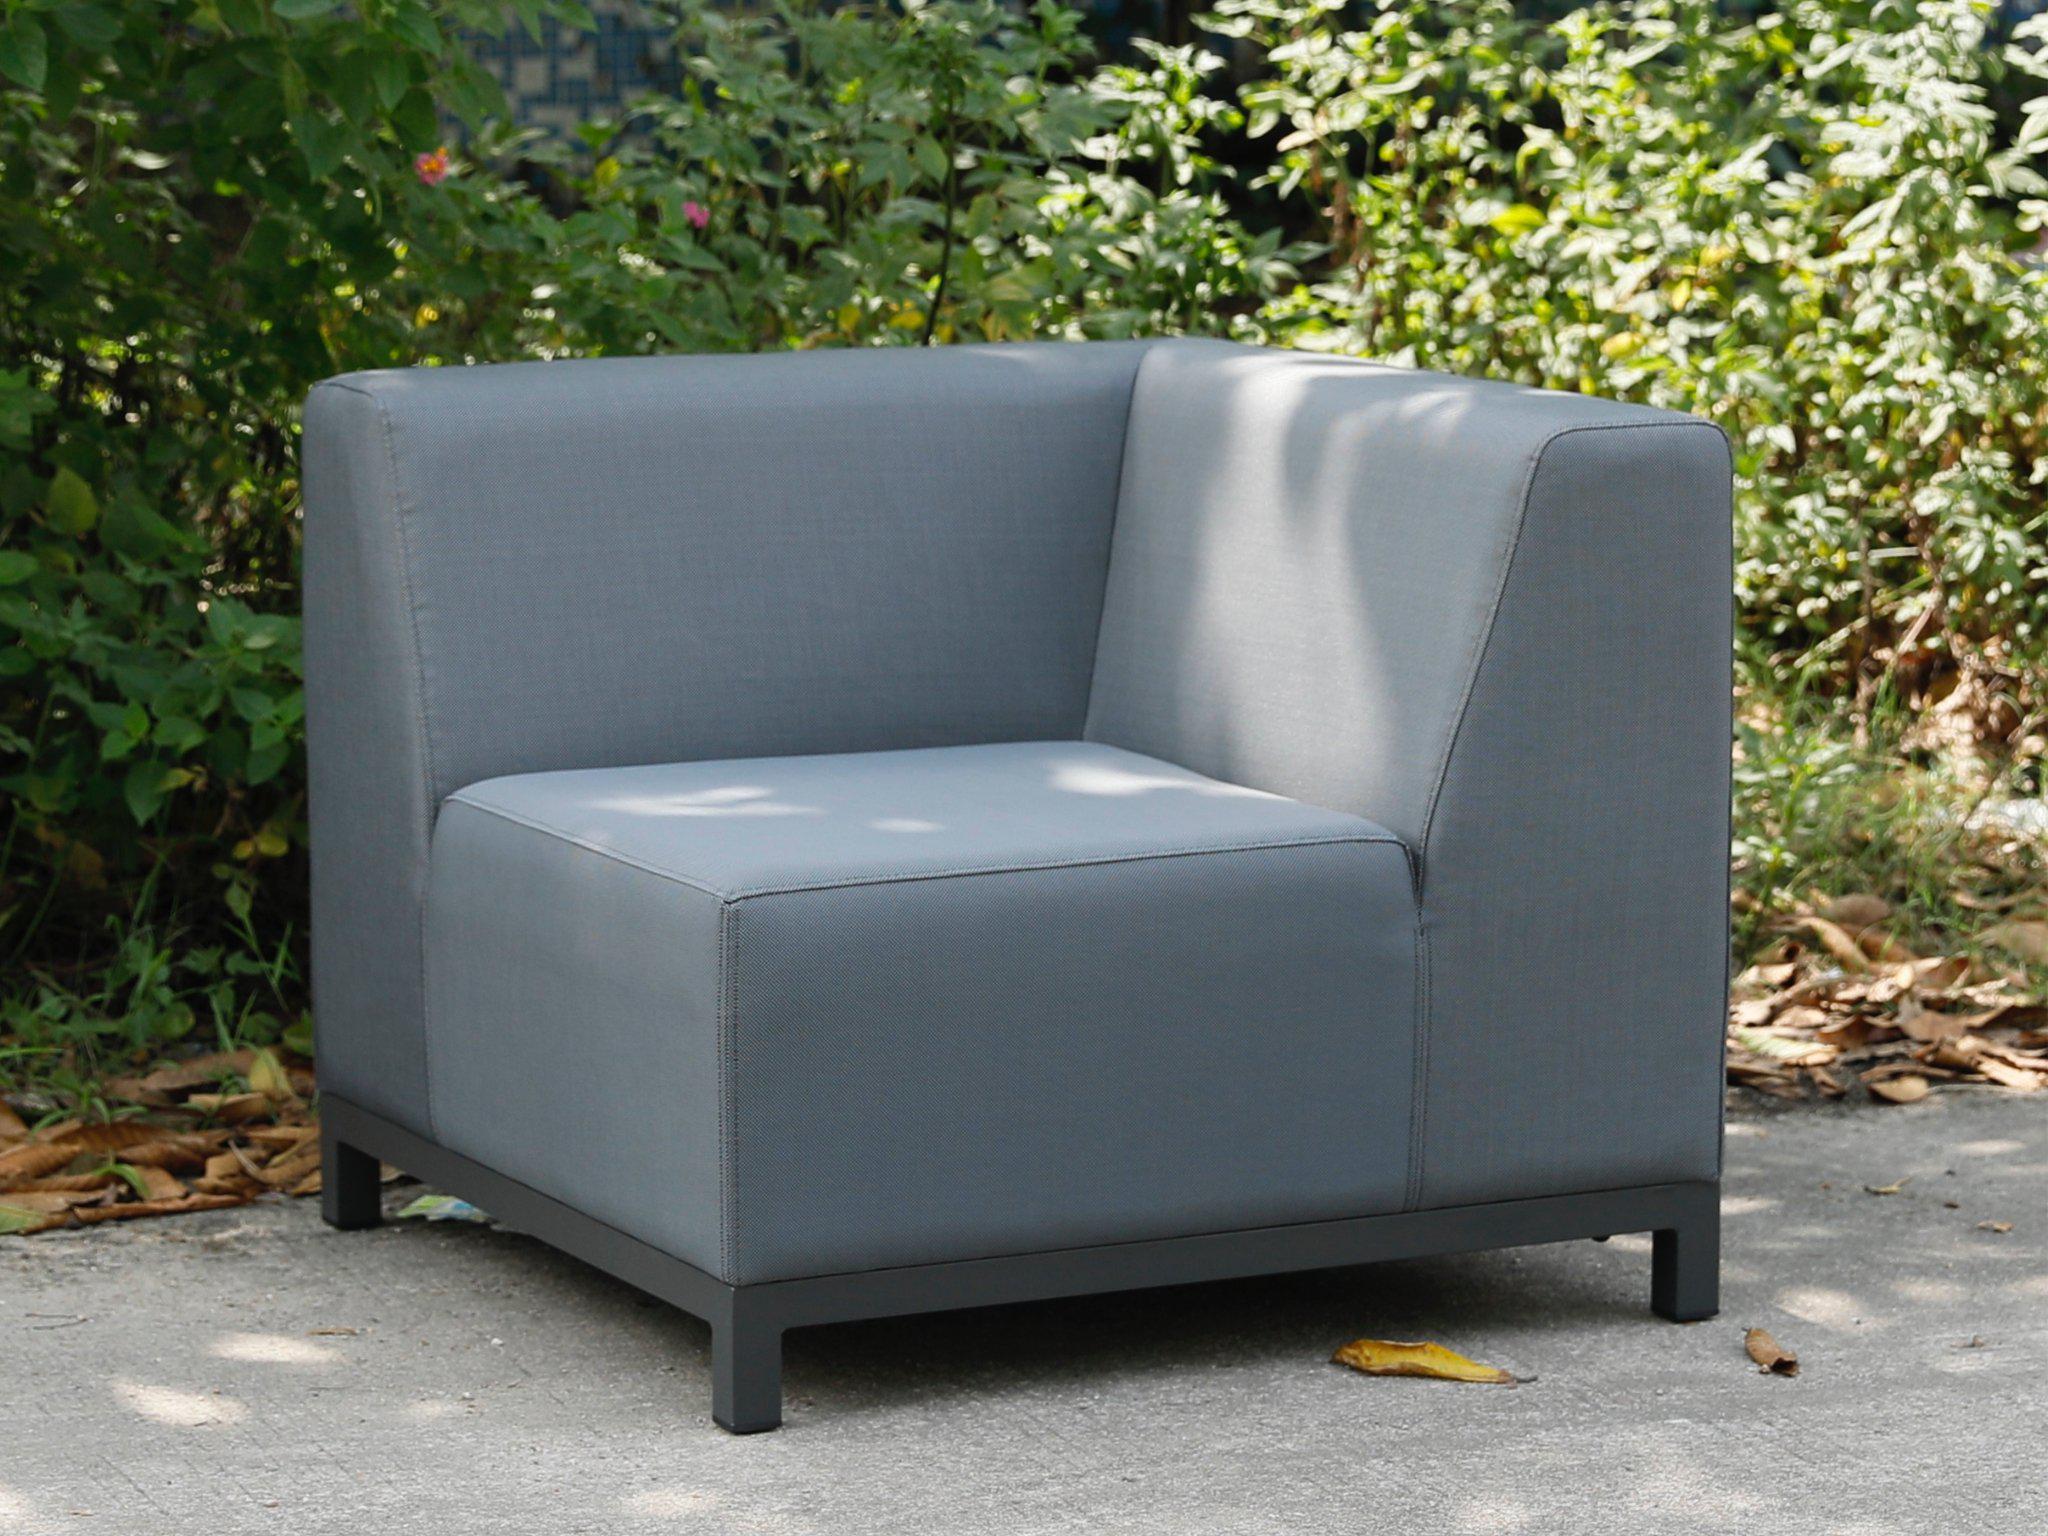 FurnitureOkay Brighton Aluminium Outdoor Lounge Corner Seat